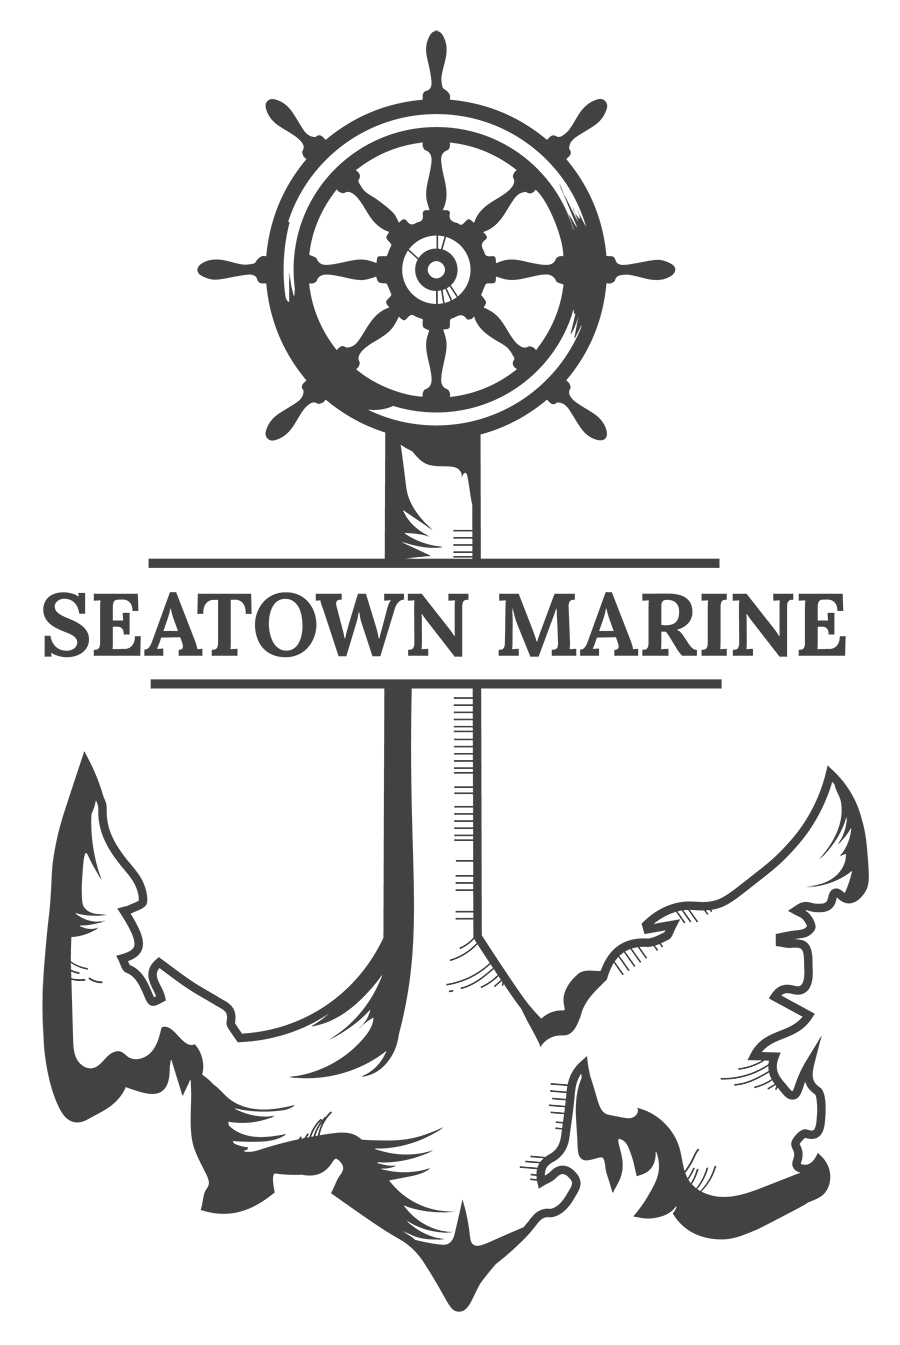 Seatown Marine Logo